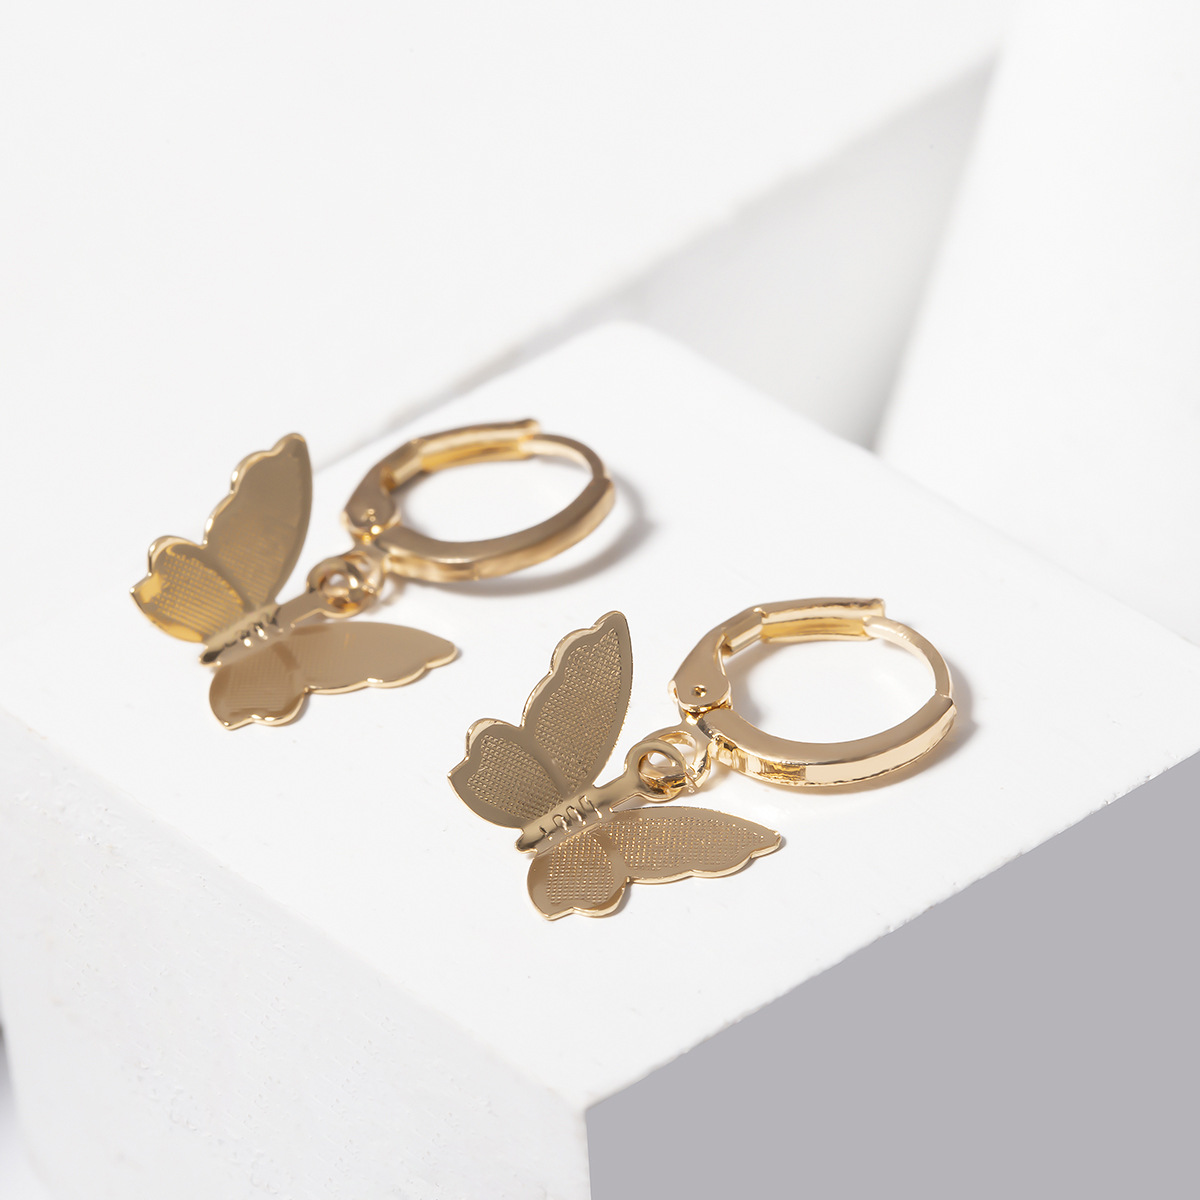 Simple Butterflies Necklaces & Earrings